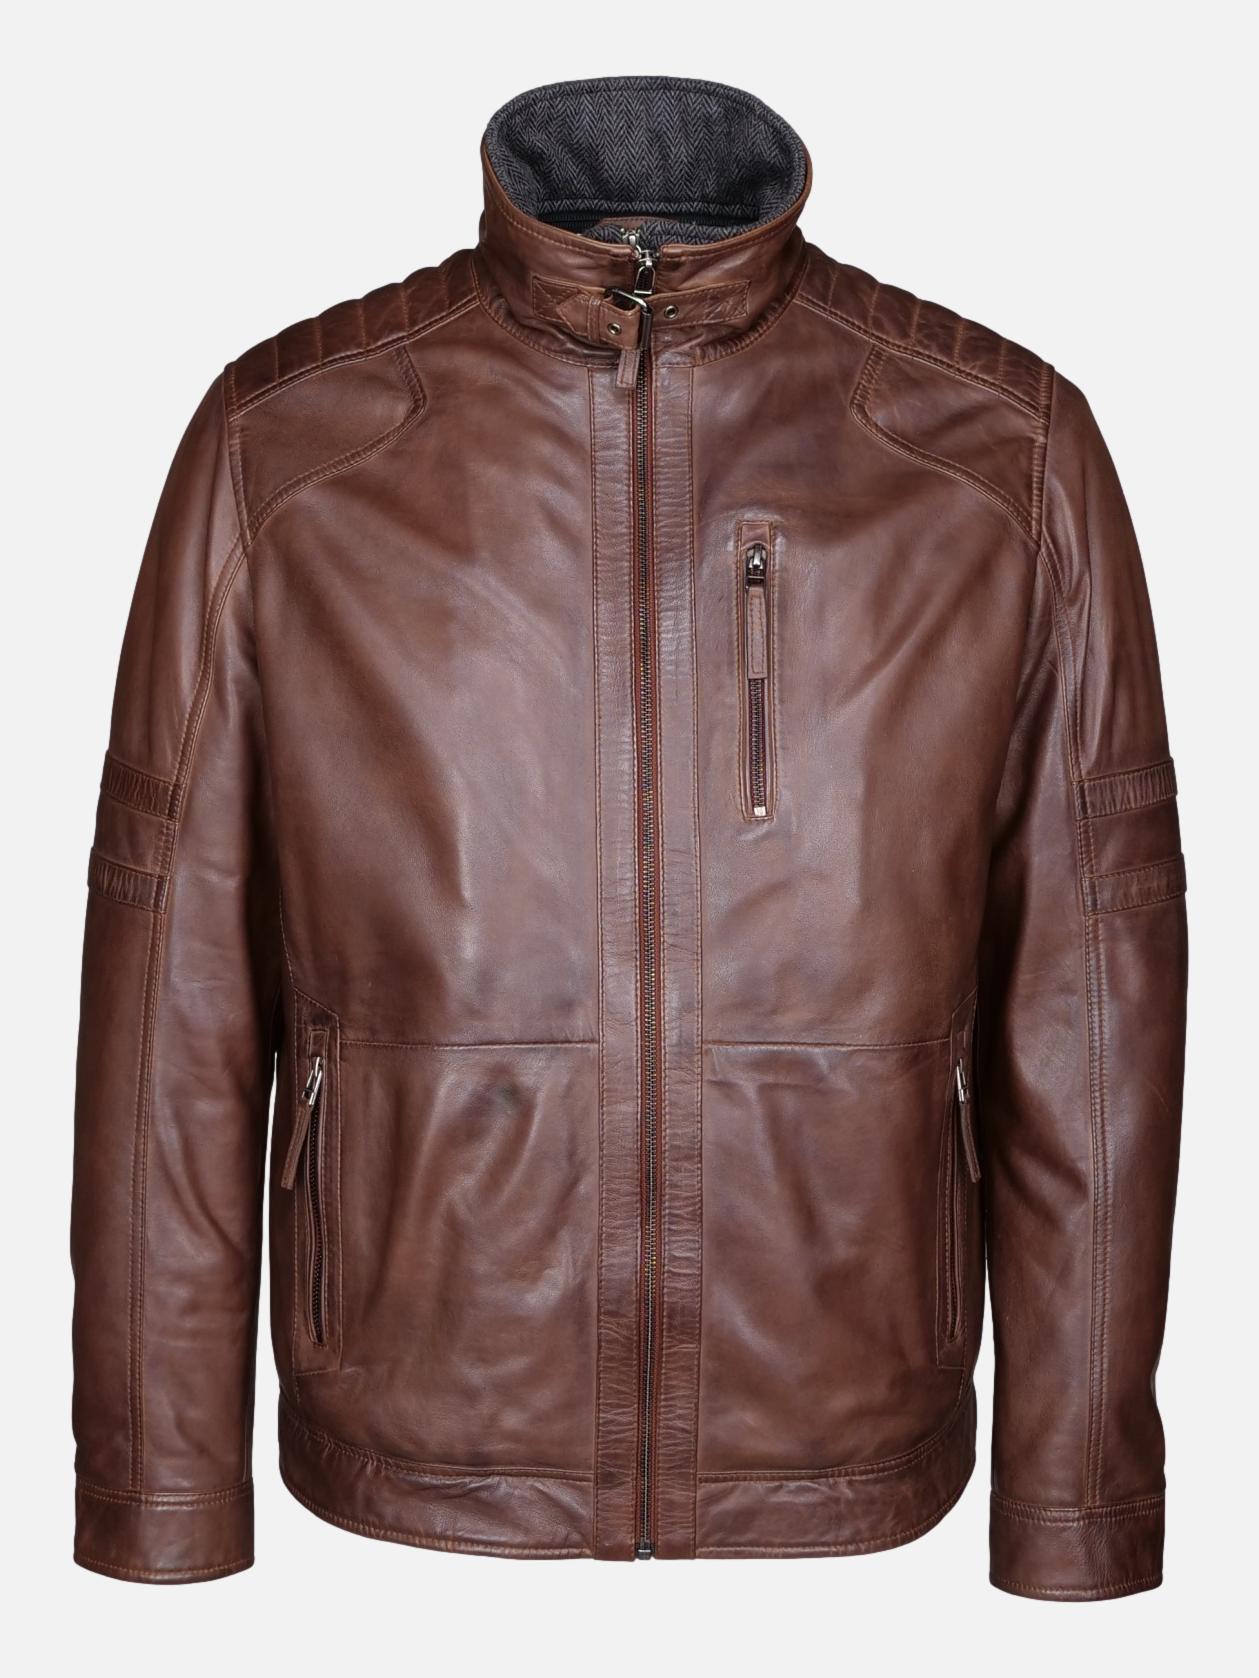 Hadrain, 72 cm. - Collar - Lamb Malli Leather - Man - Copper Brown